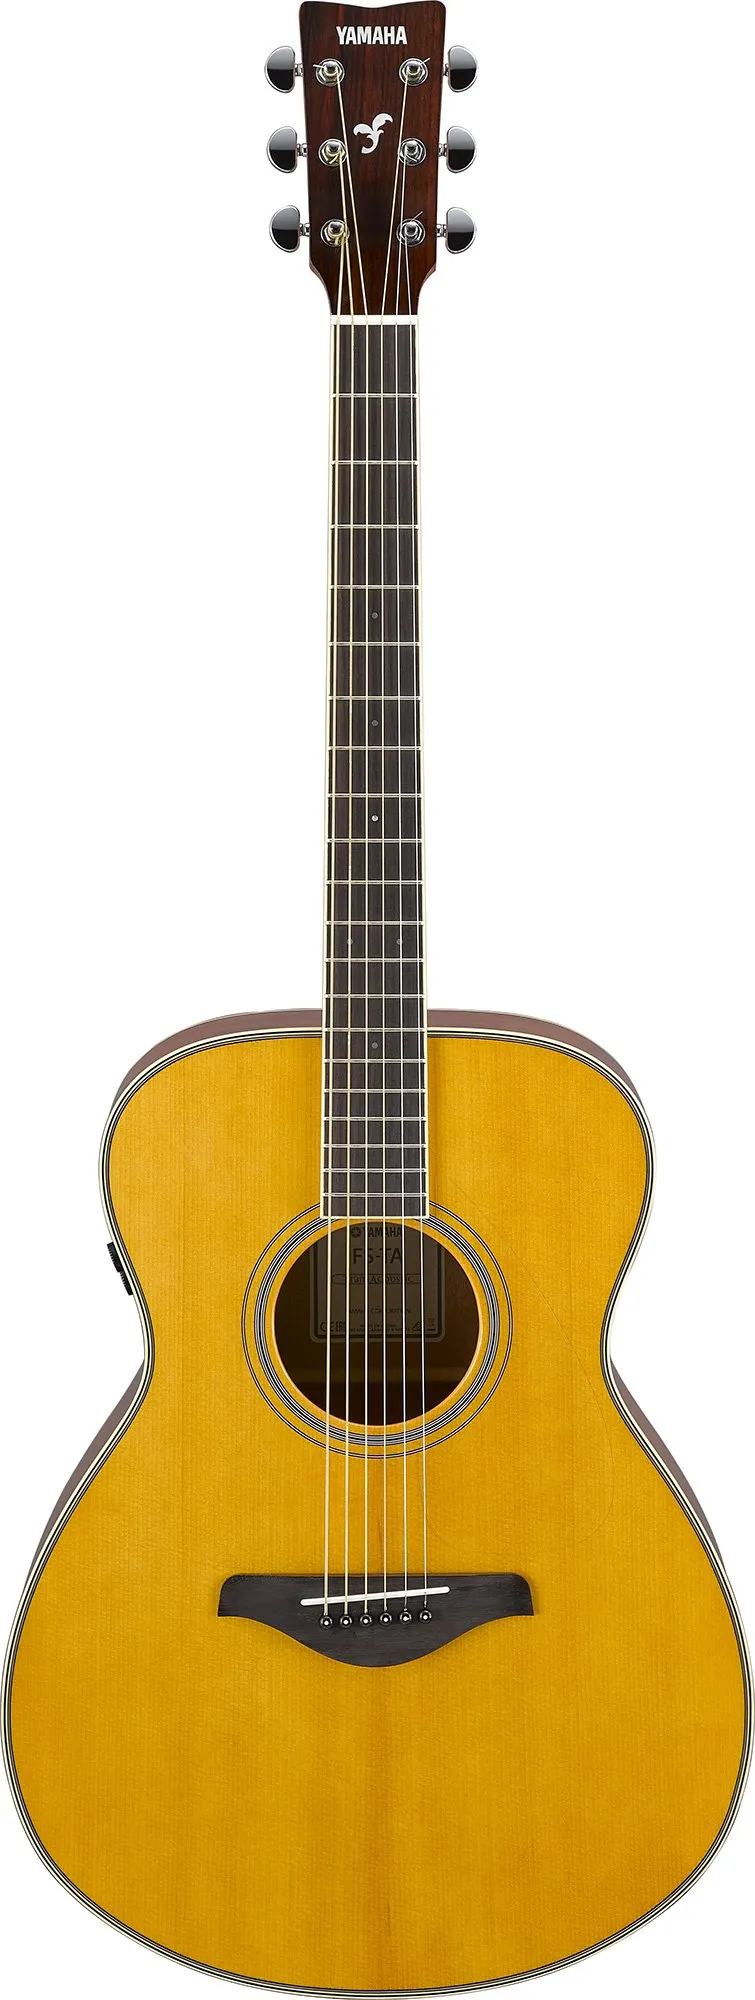 FS-TA Vintage Tint TransAcoustic Gitarre